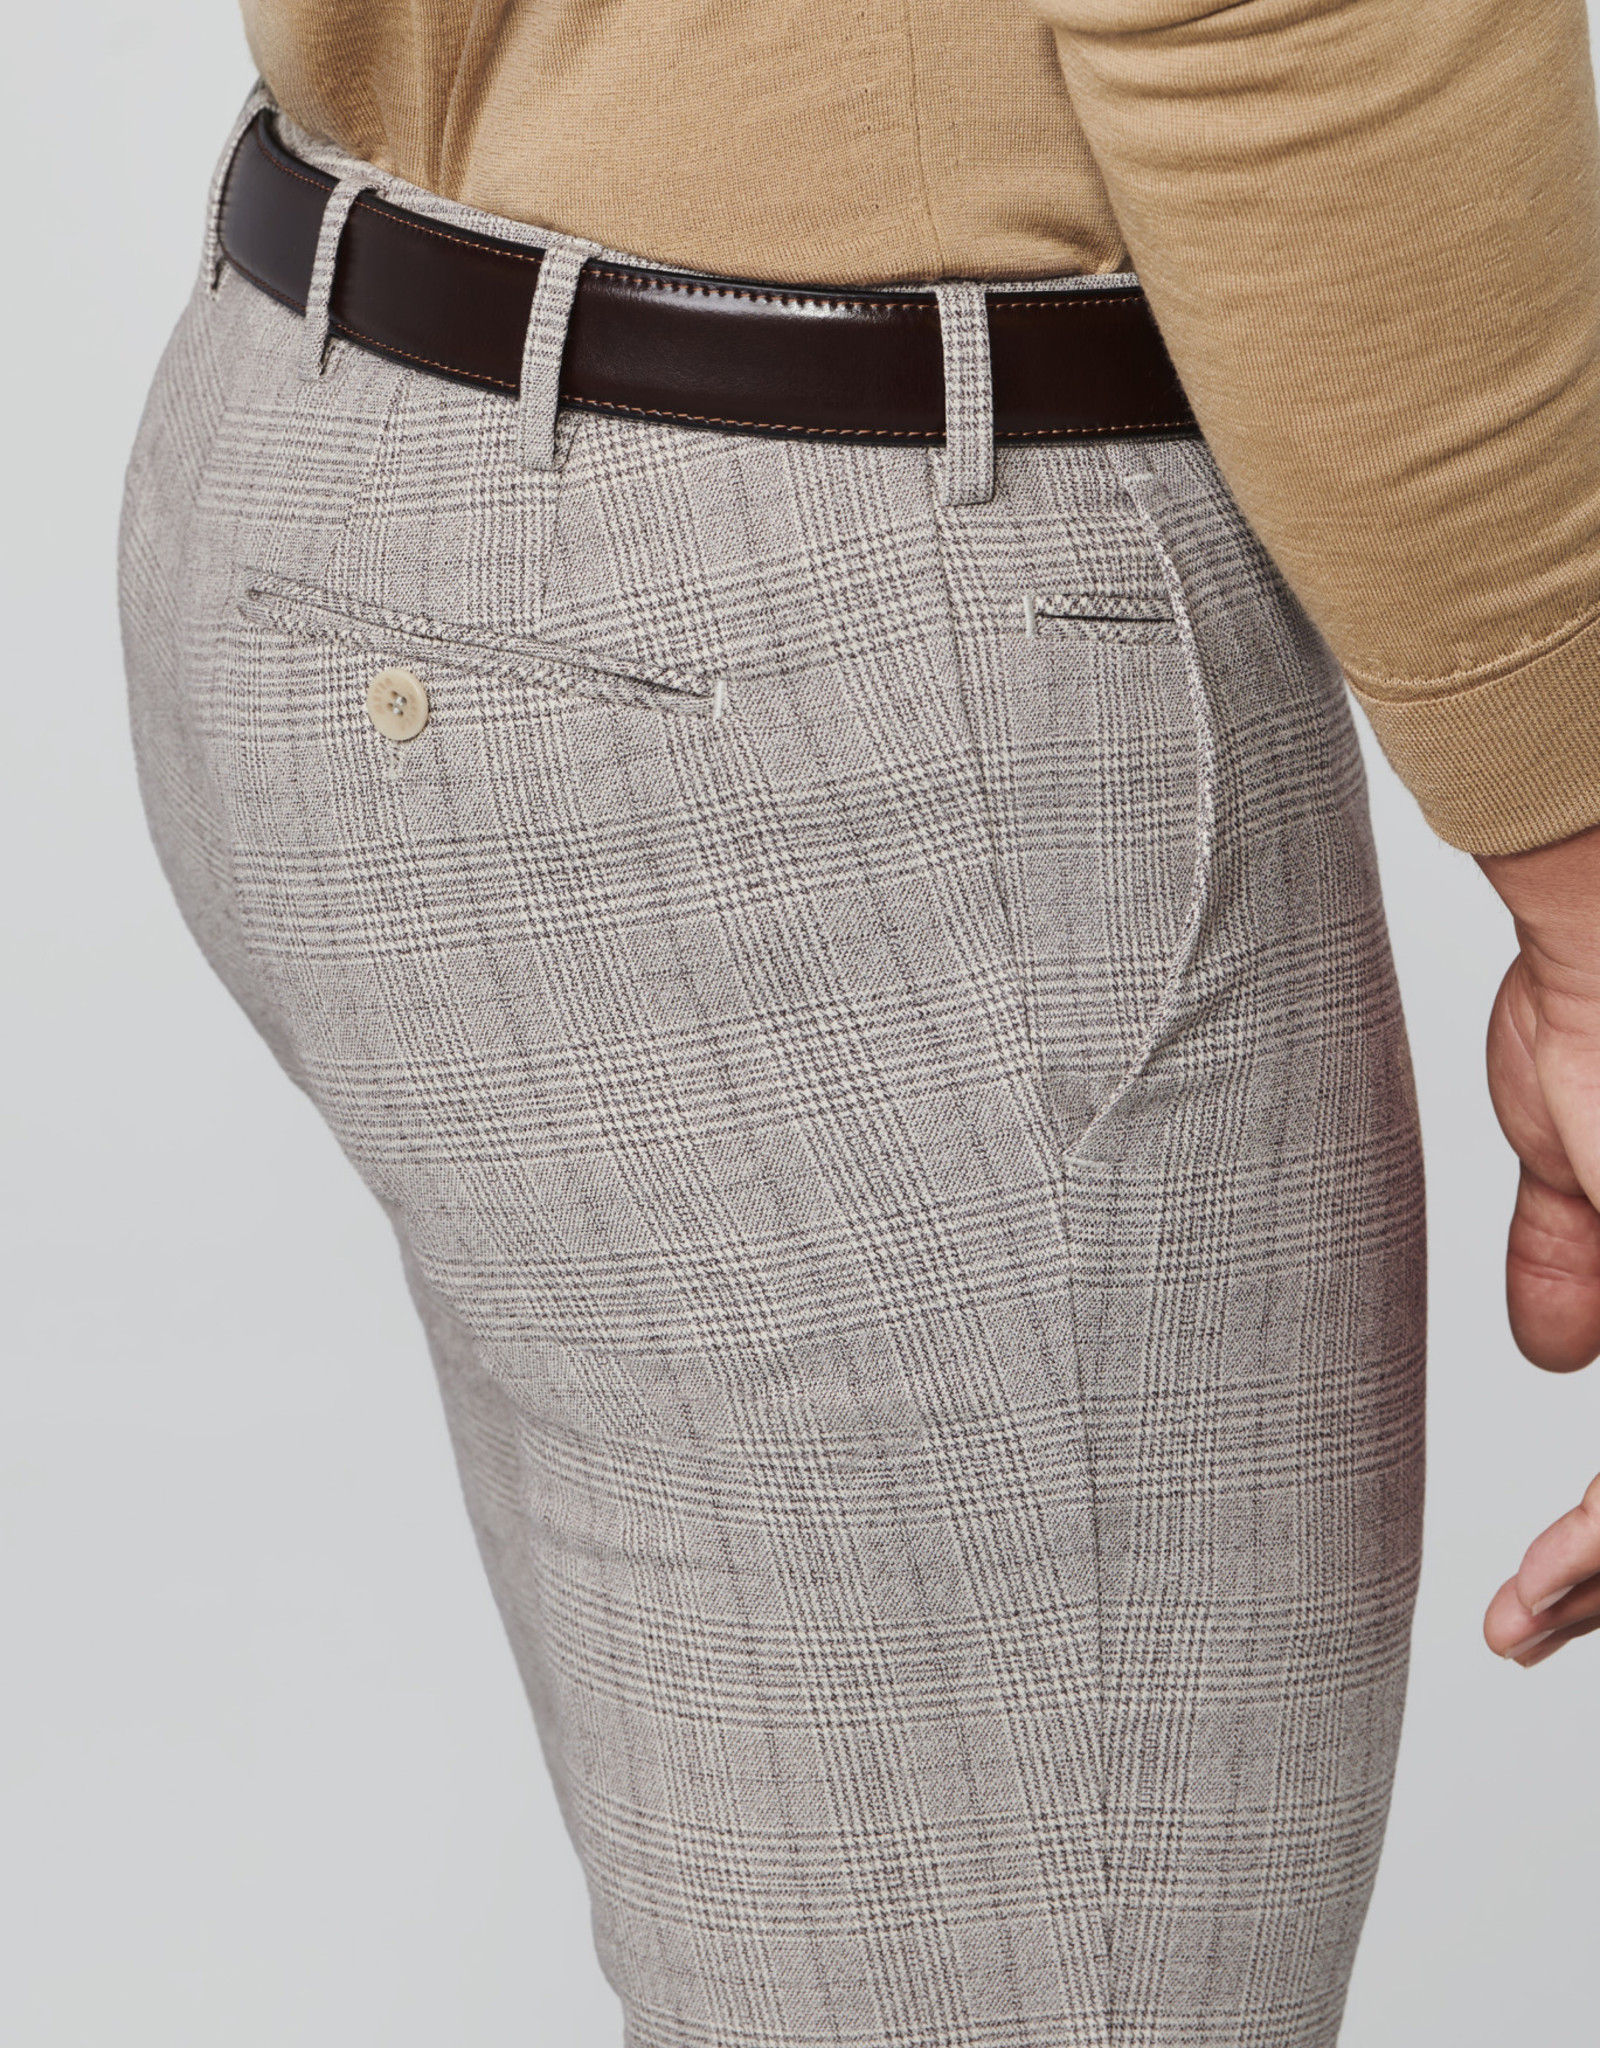 Meyer Exclusive Meyer Exclusive trousers cotton beige check Bonn